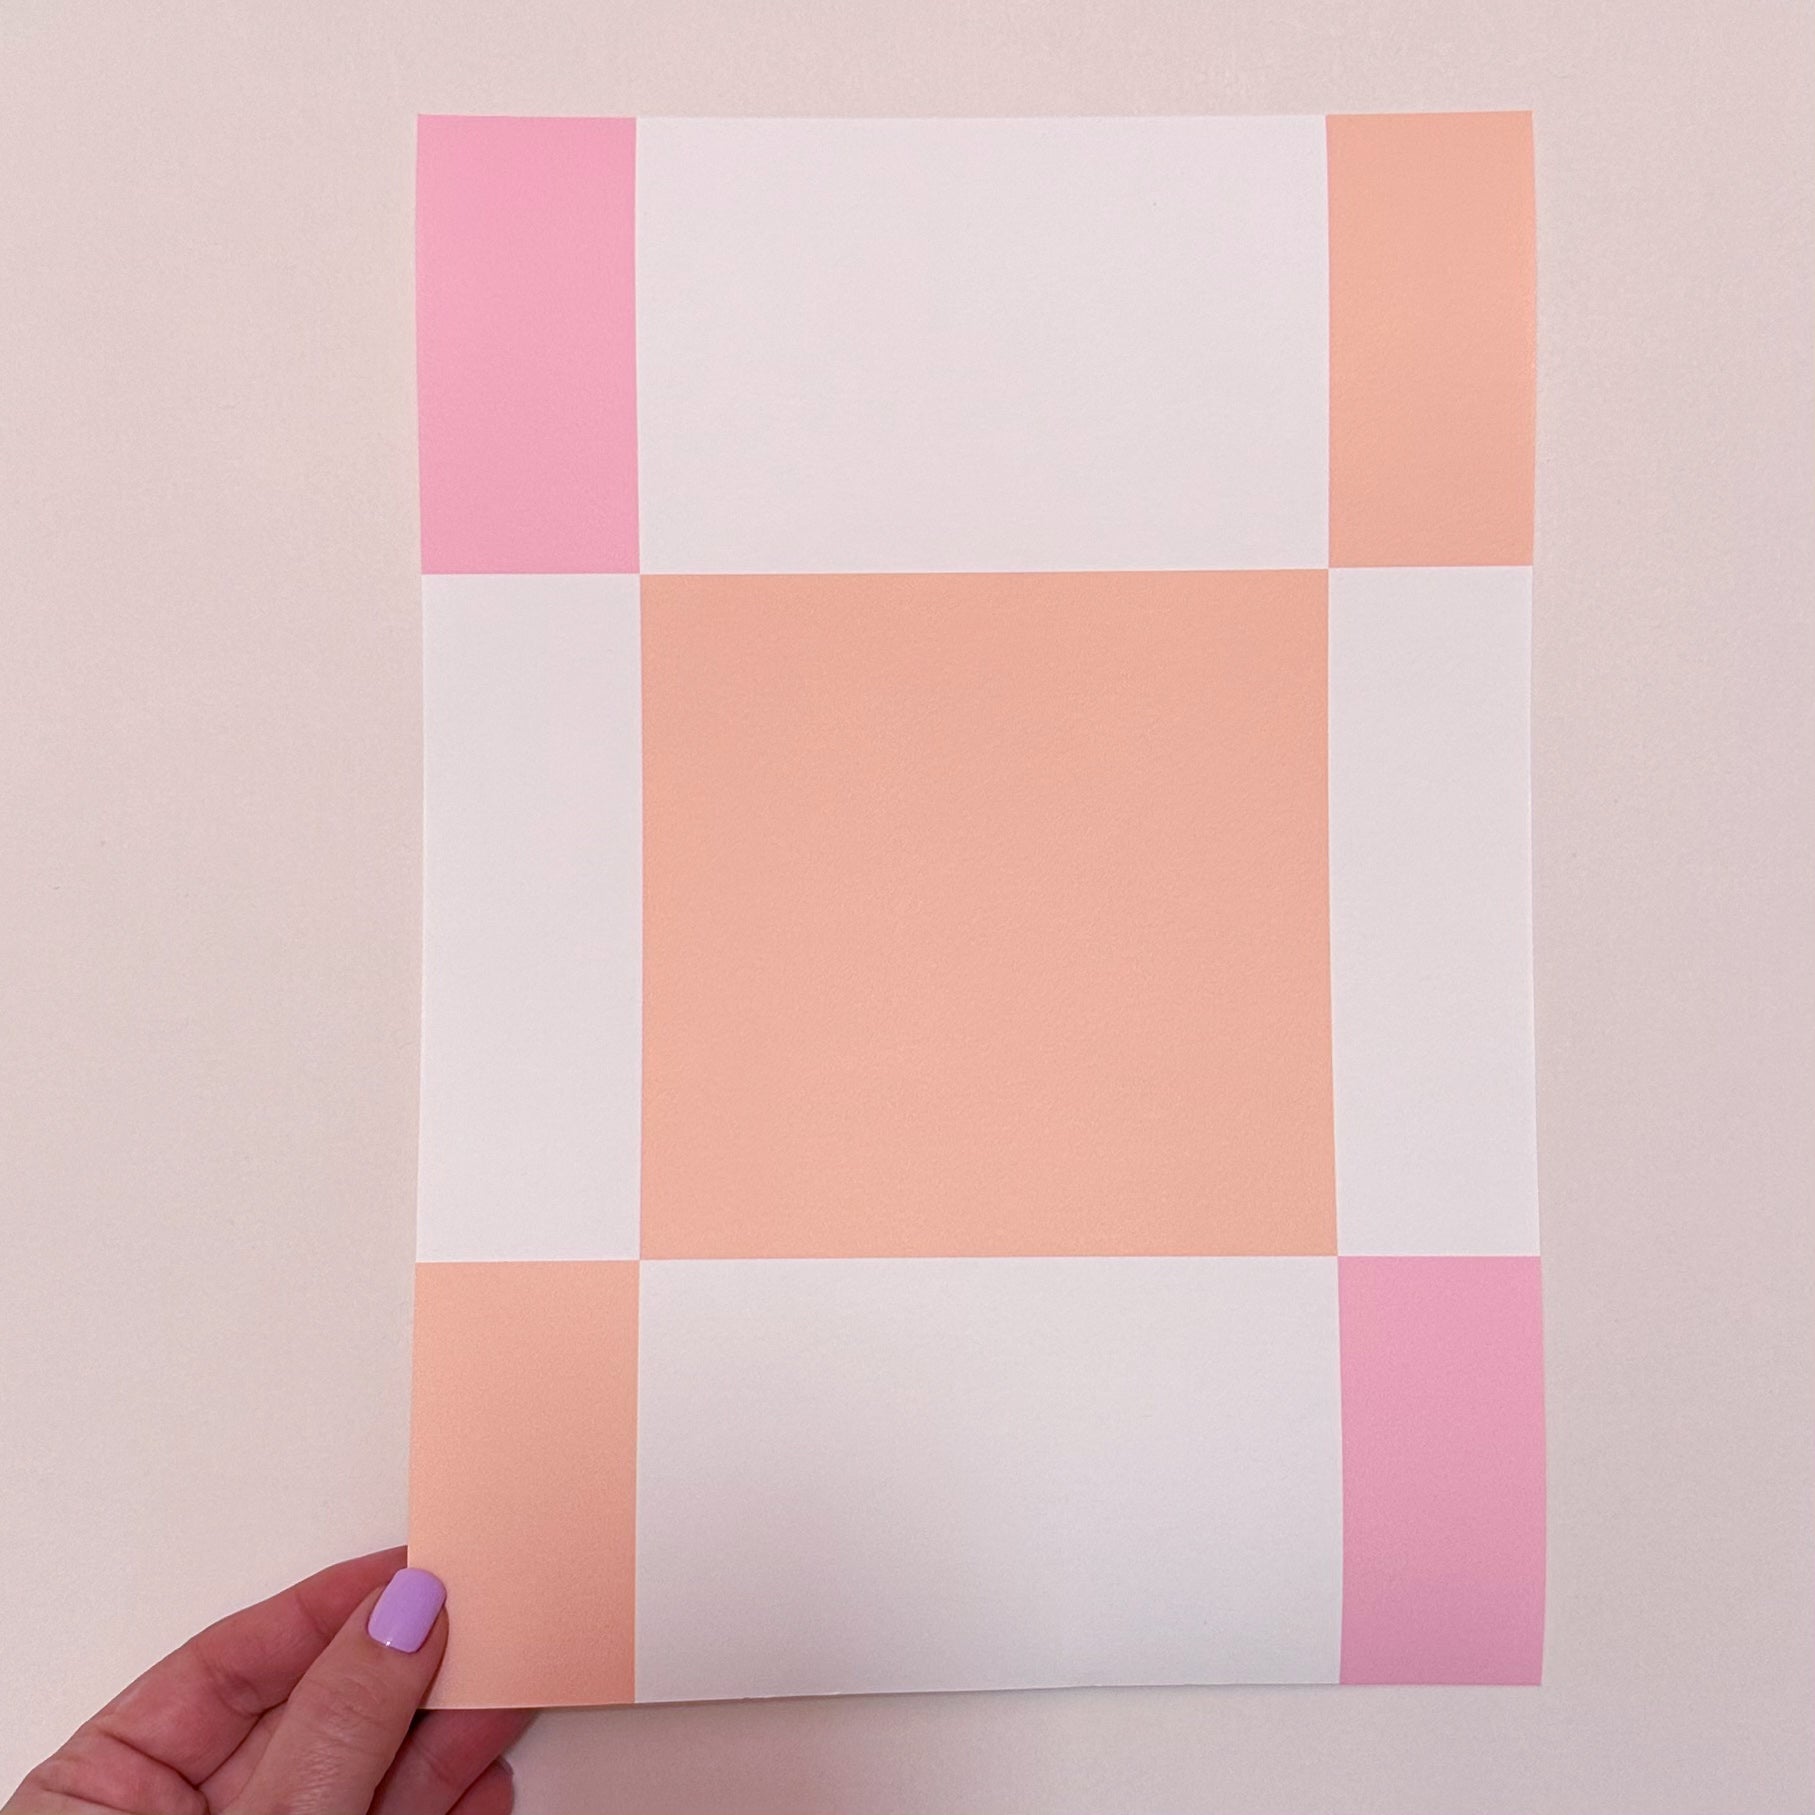 Peach and pink colour interior wallpaper with checkerboard design 